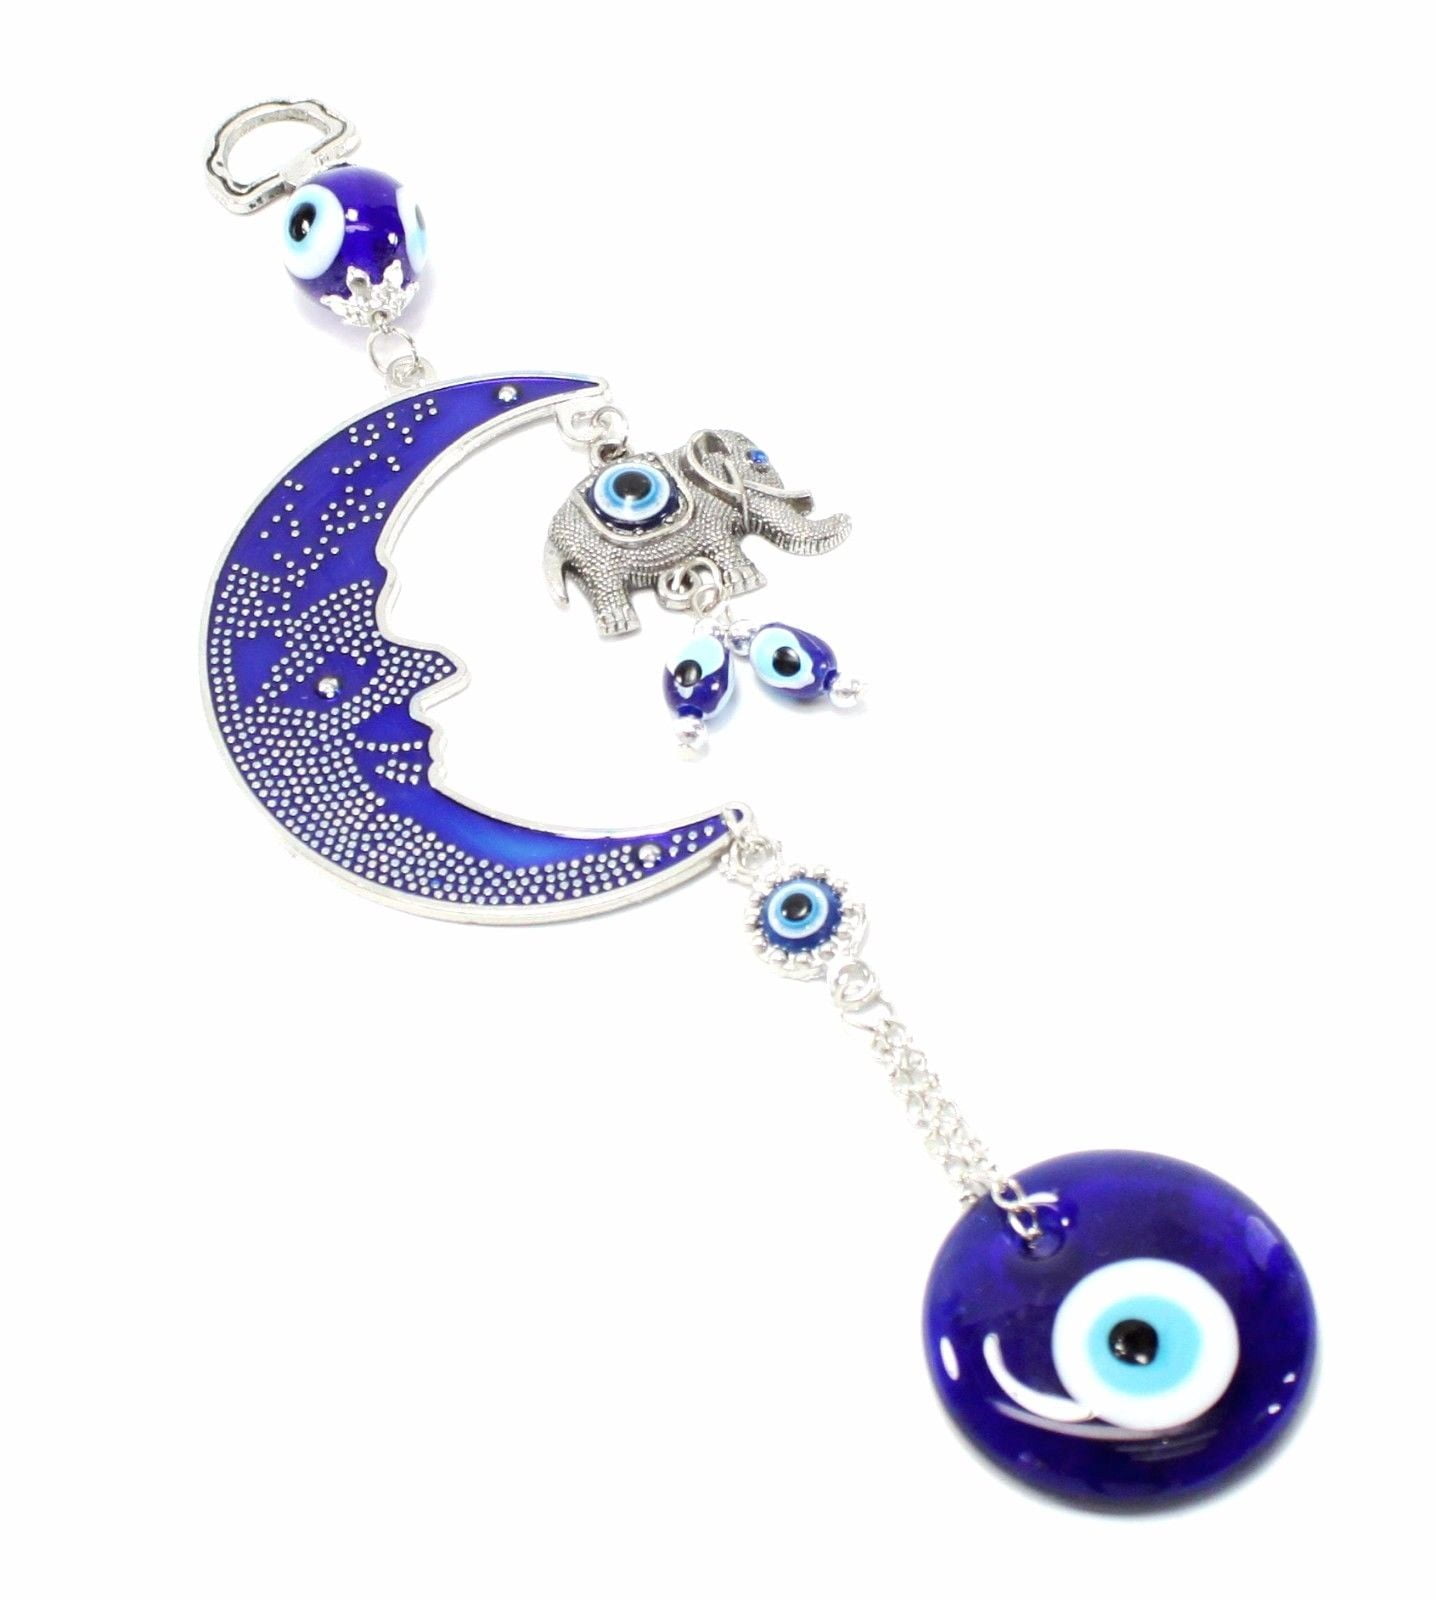 Blue Evil Eye Car Handbag or Wall Hanging Amulet Charm Protection Ornament Decor 